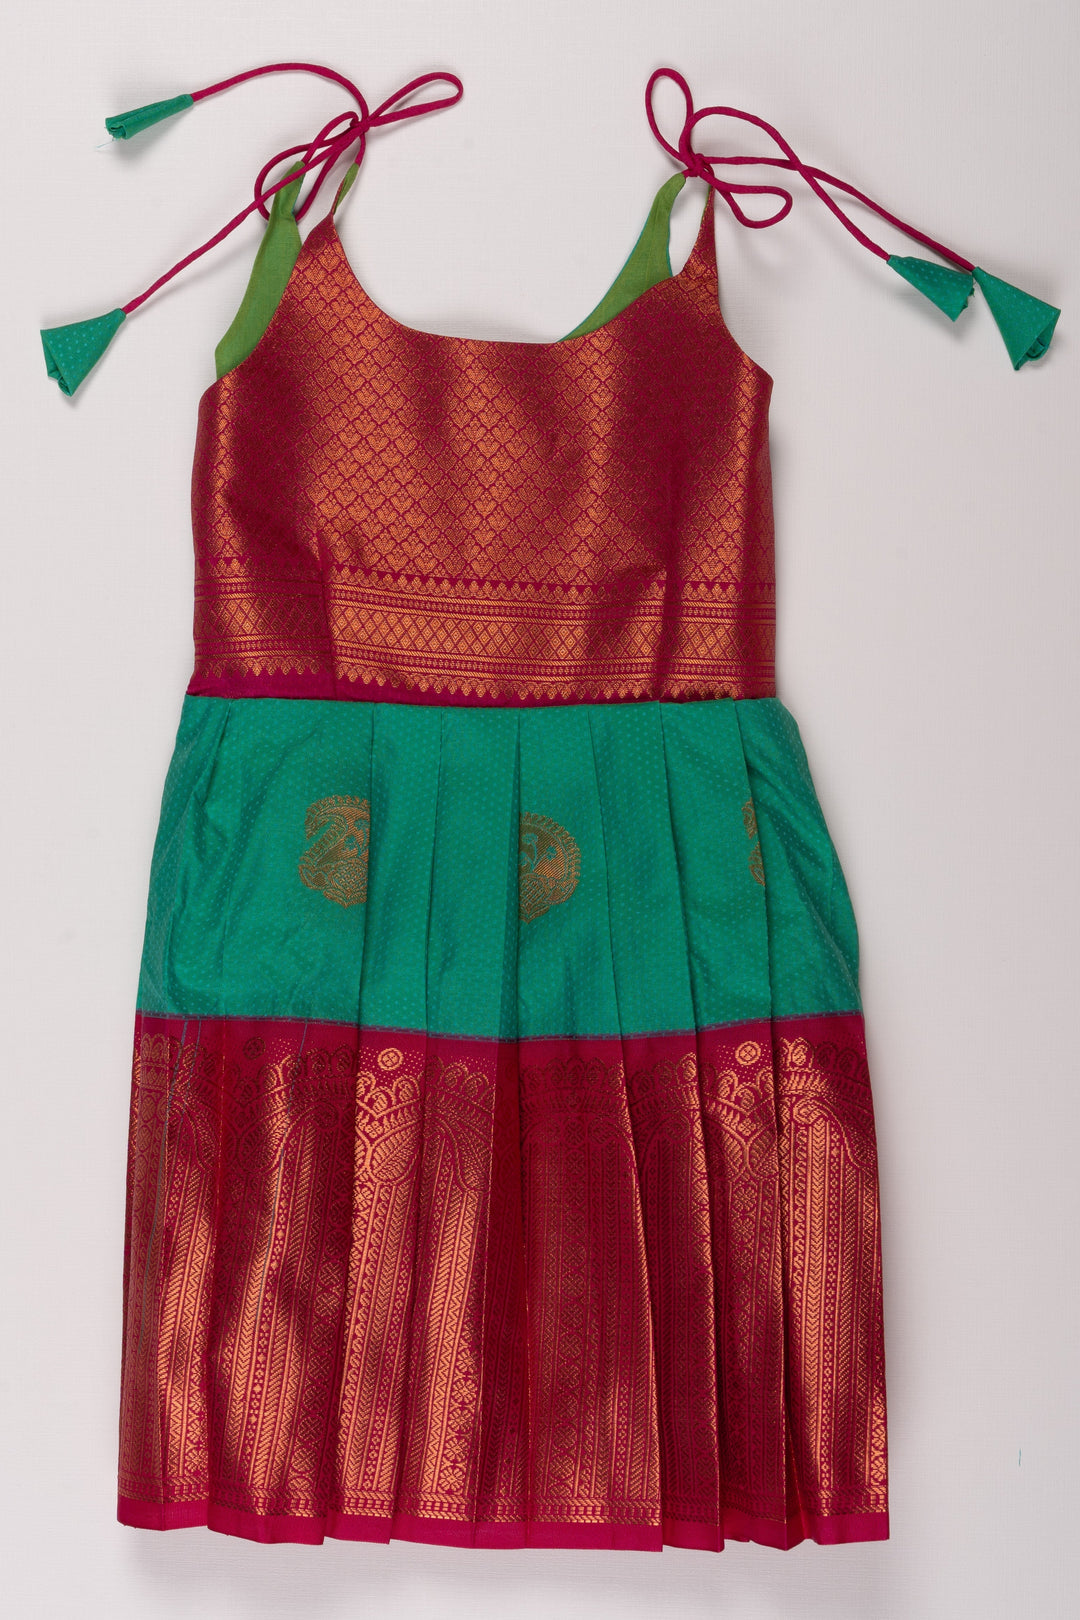 The Nesavu Tie Up Frock Vibrant Green & Magenta Silk Party Dress - Exquisite Brocade Design Nesavu 20 (3Y) / Green / Style 2 T336B-20 Green and Magenta Silk Dress | Luxurious Brocade Evening Wear | The Nesavu